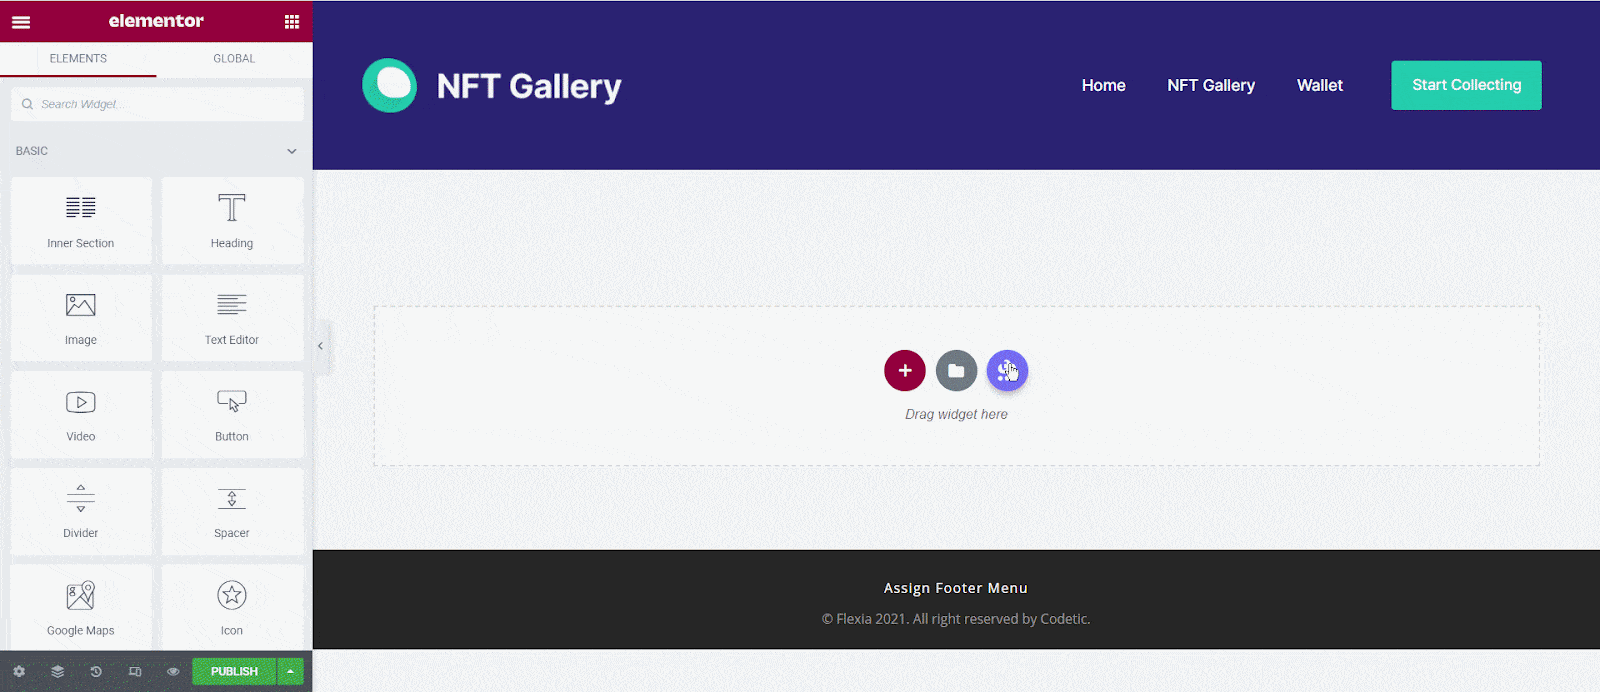 nft marketplace website